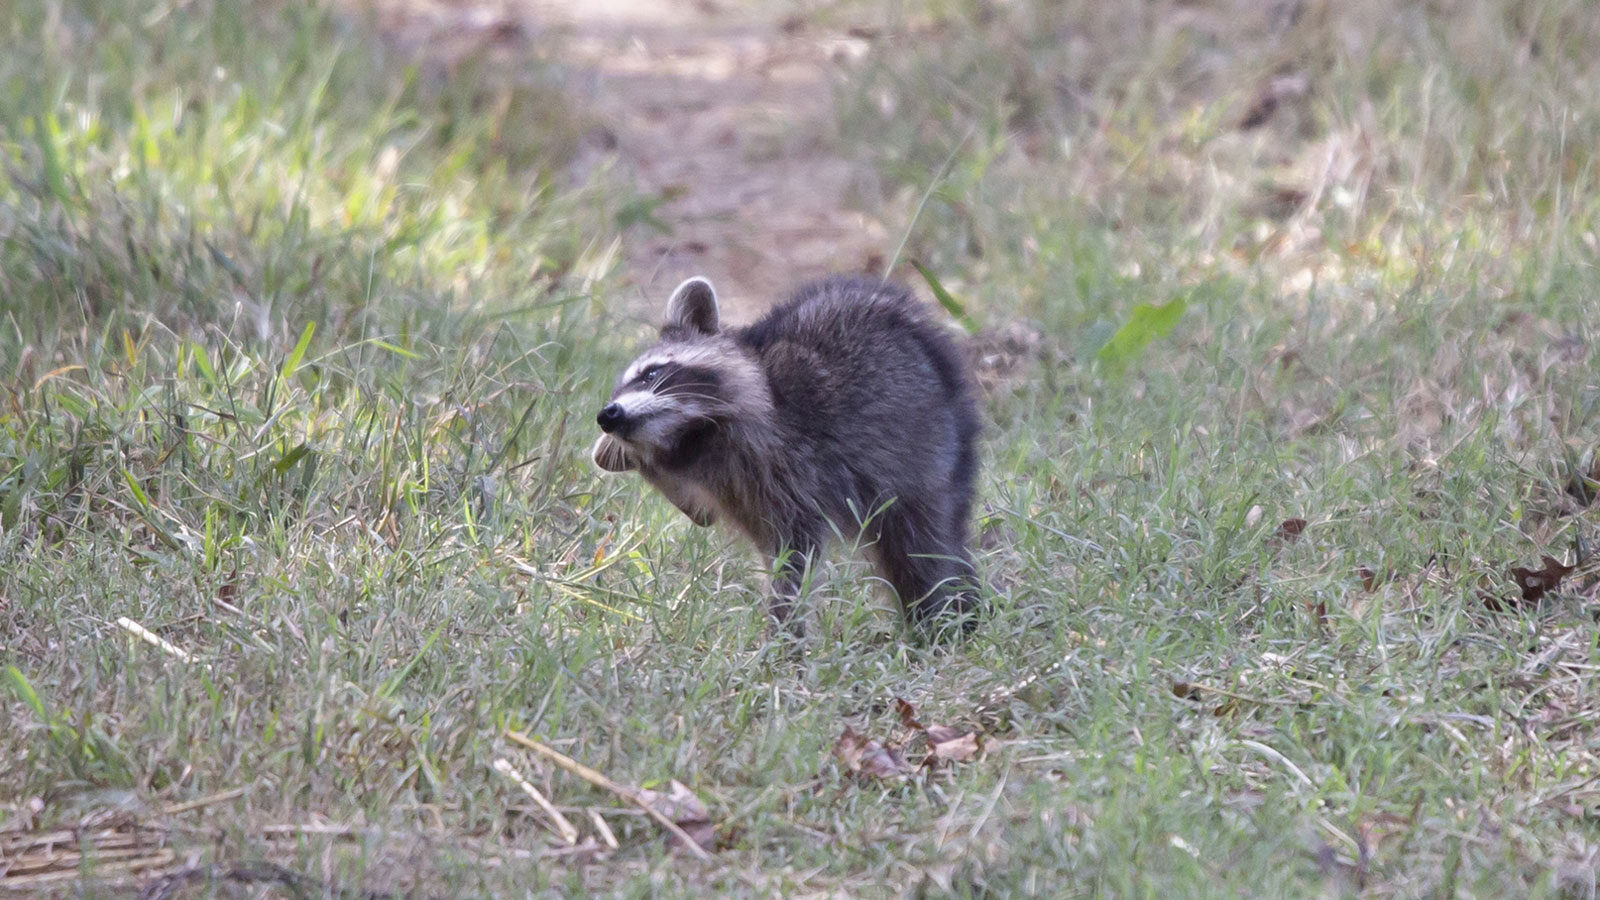 Raccoon grooming in grass